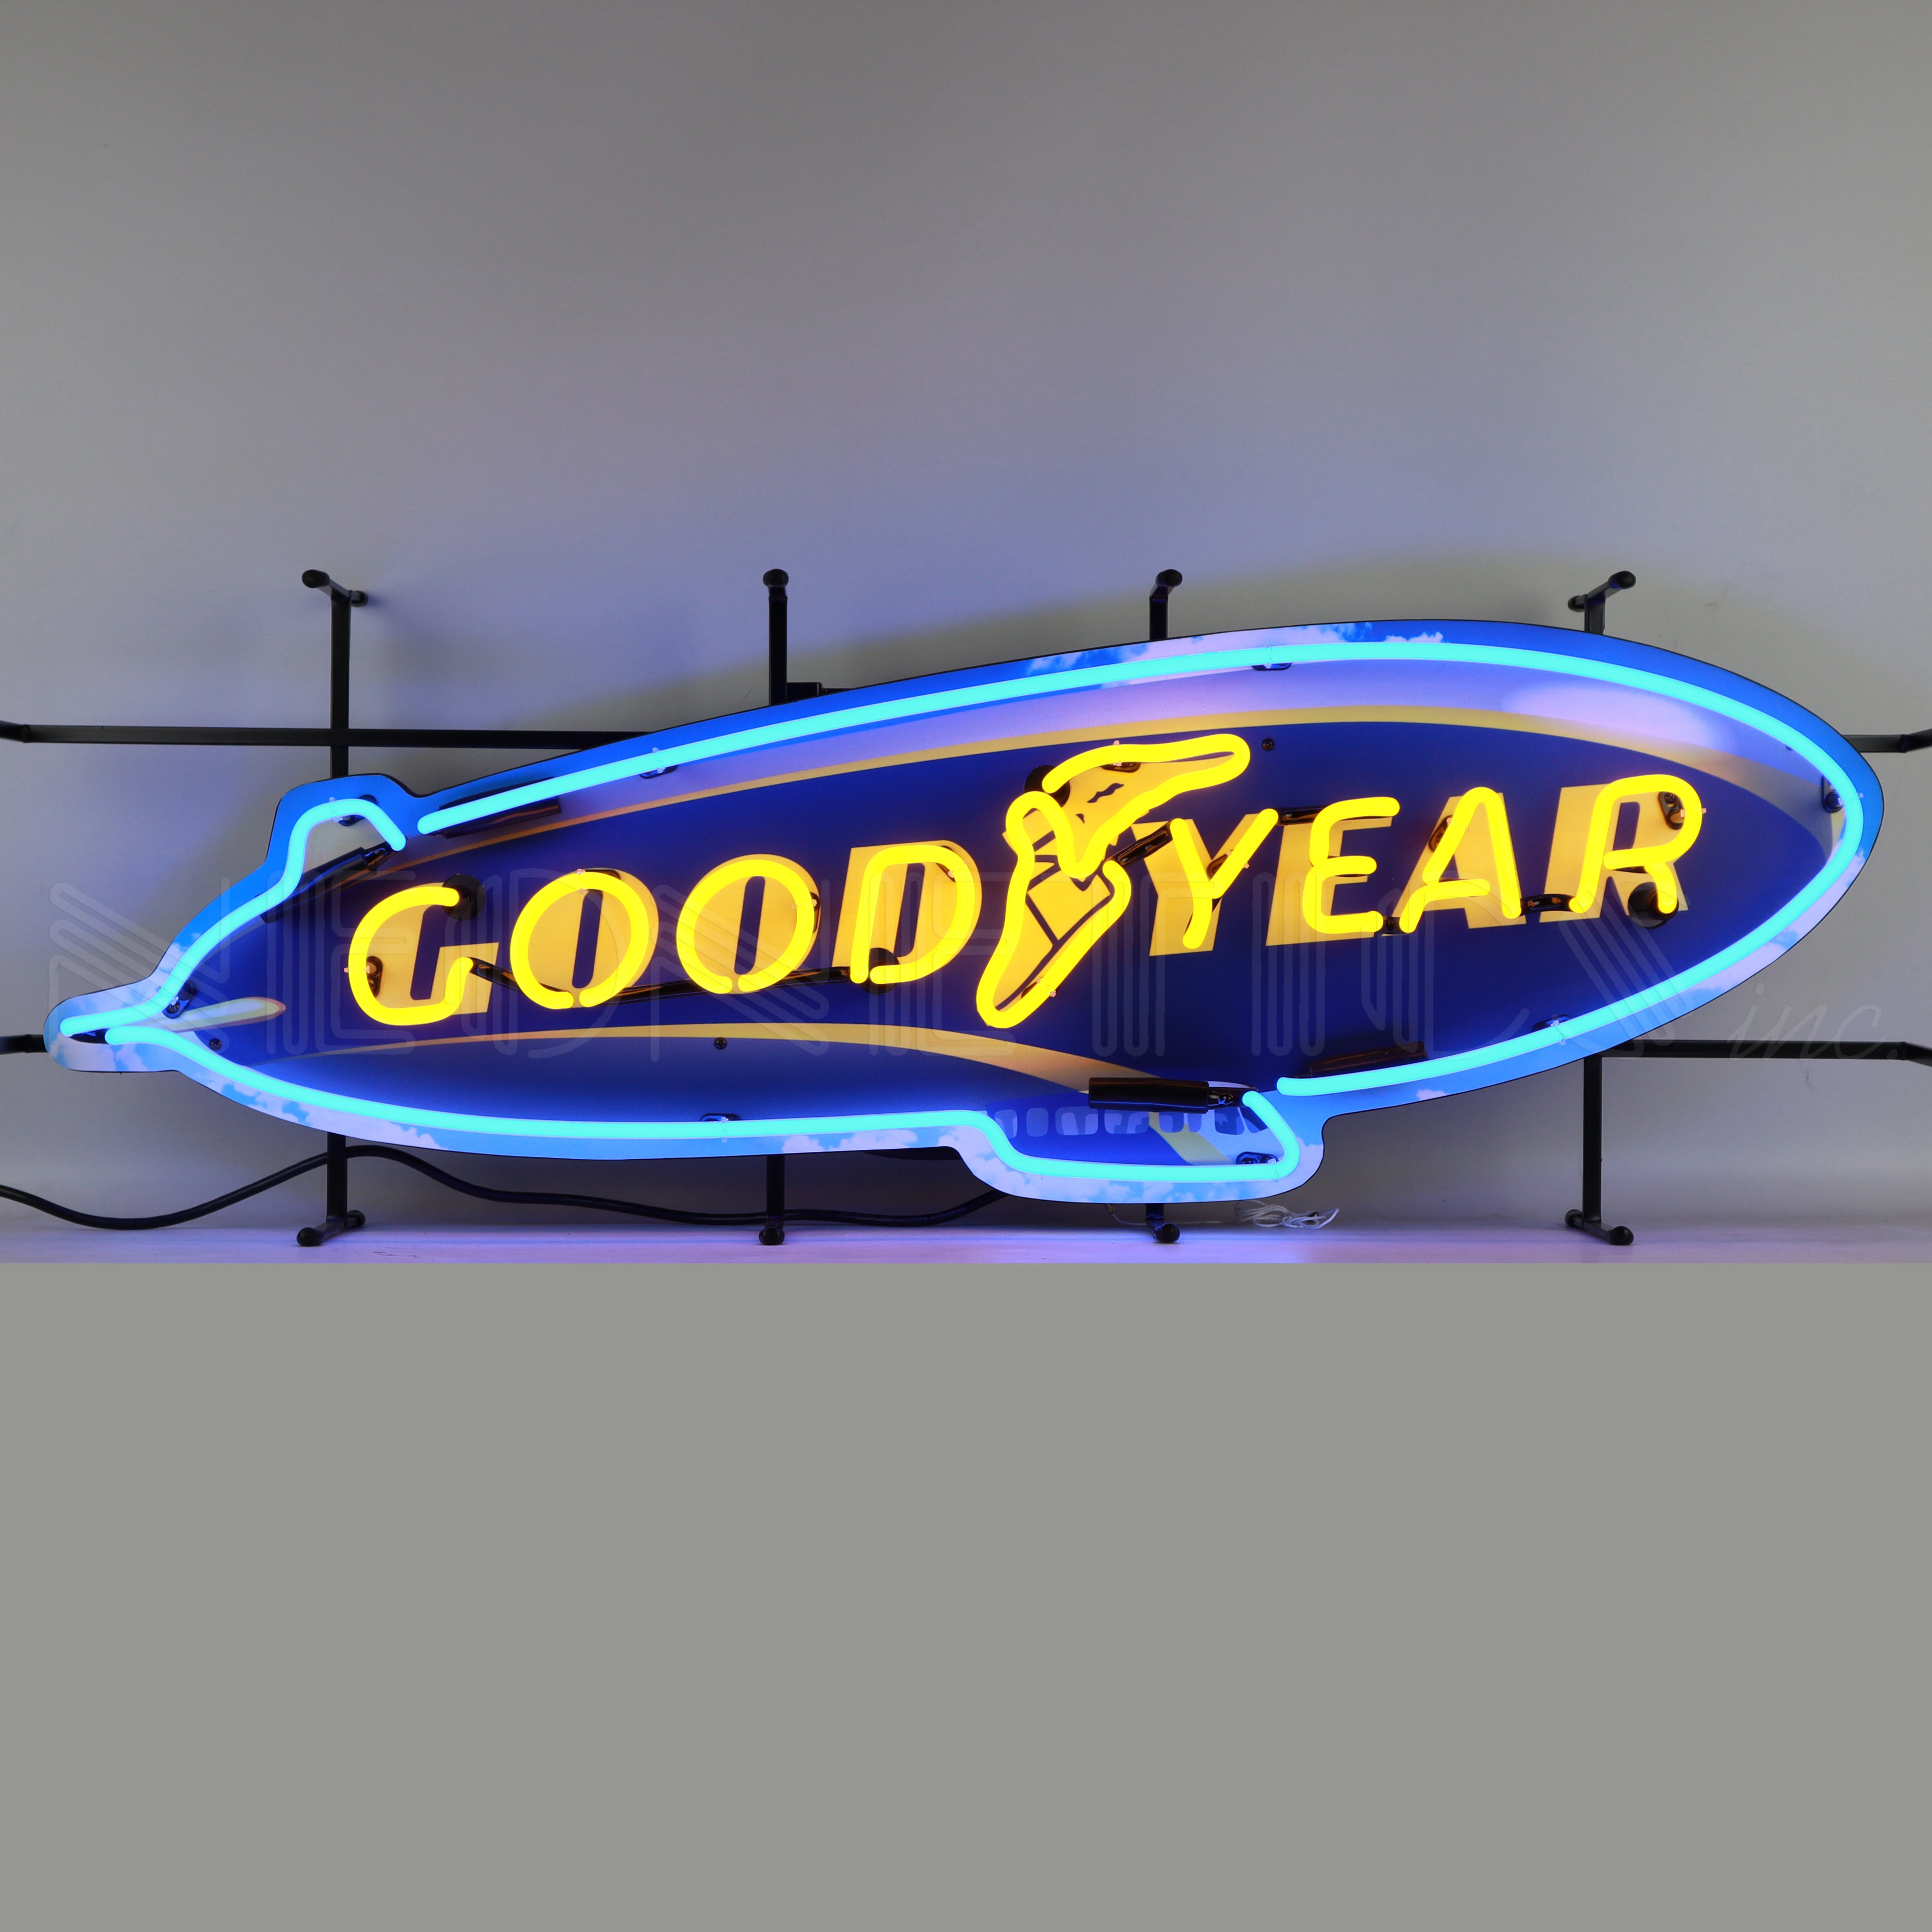 Goodyear Blimp Neon Sign